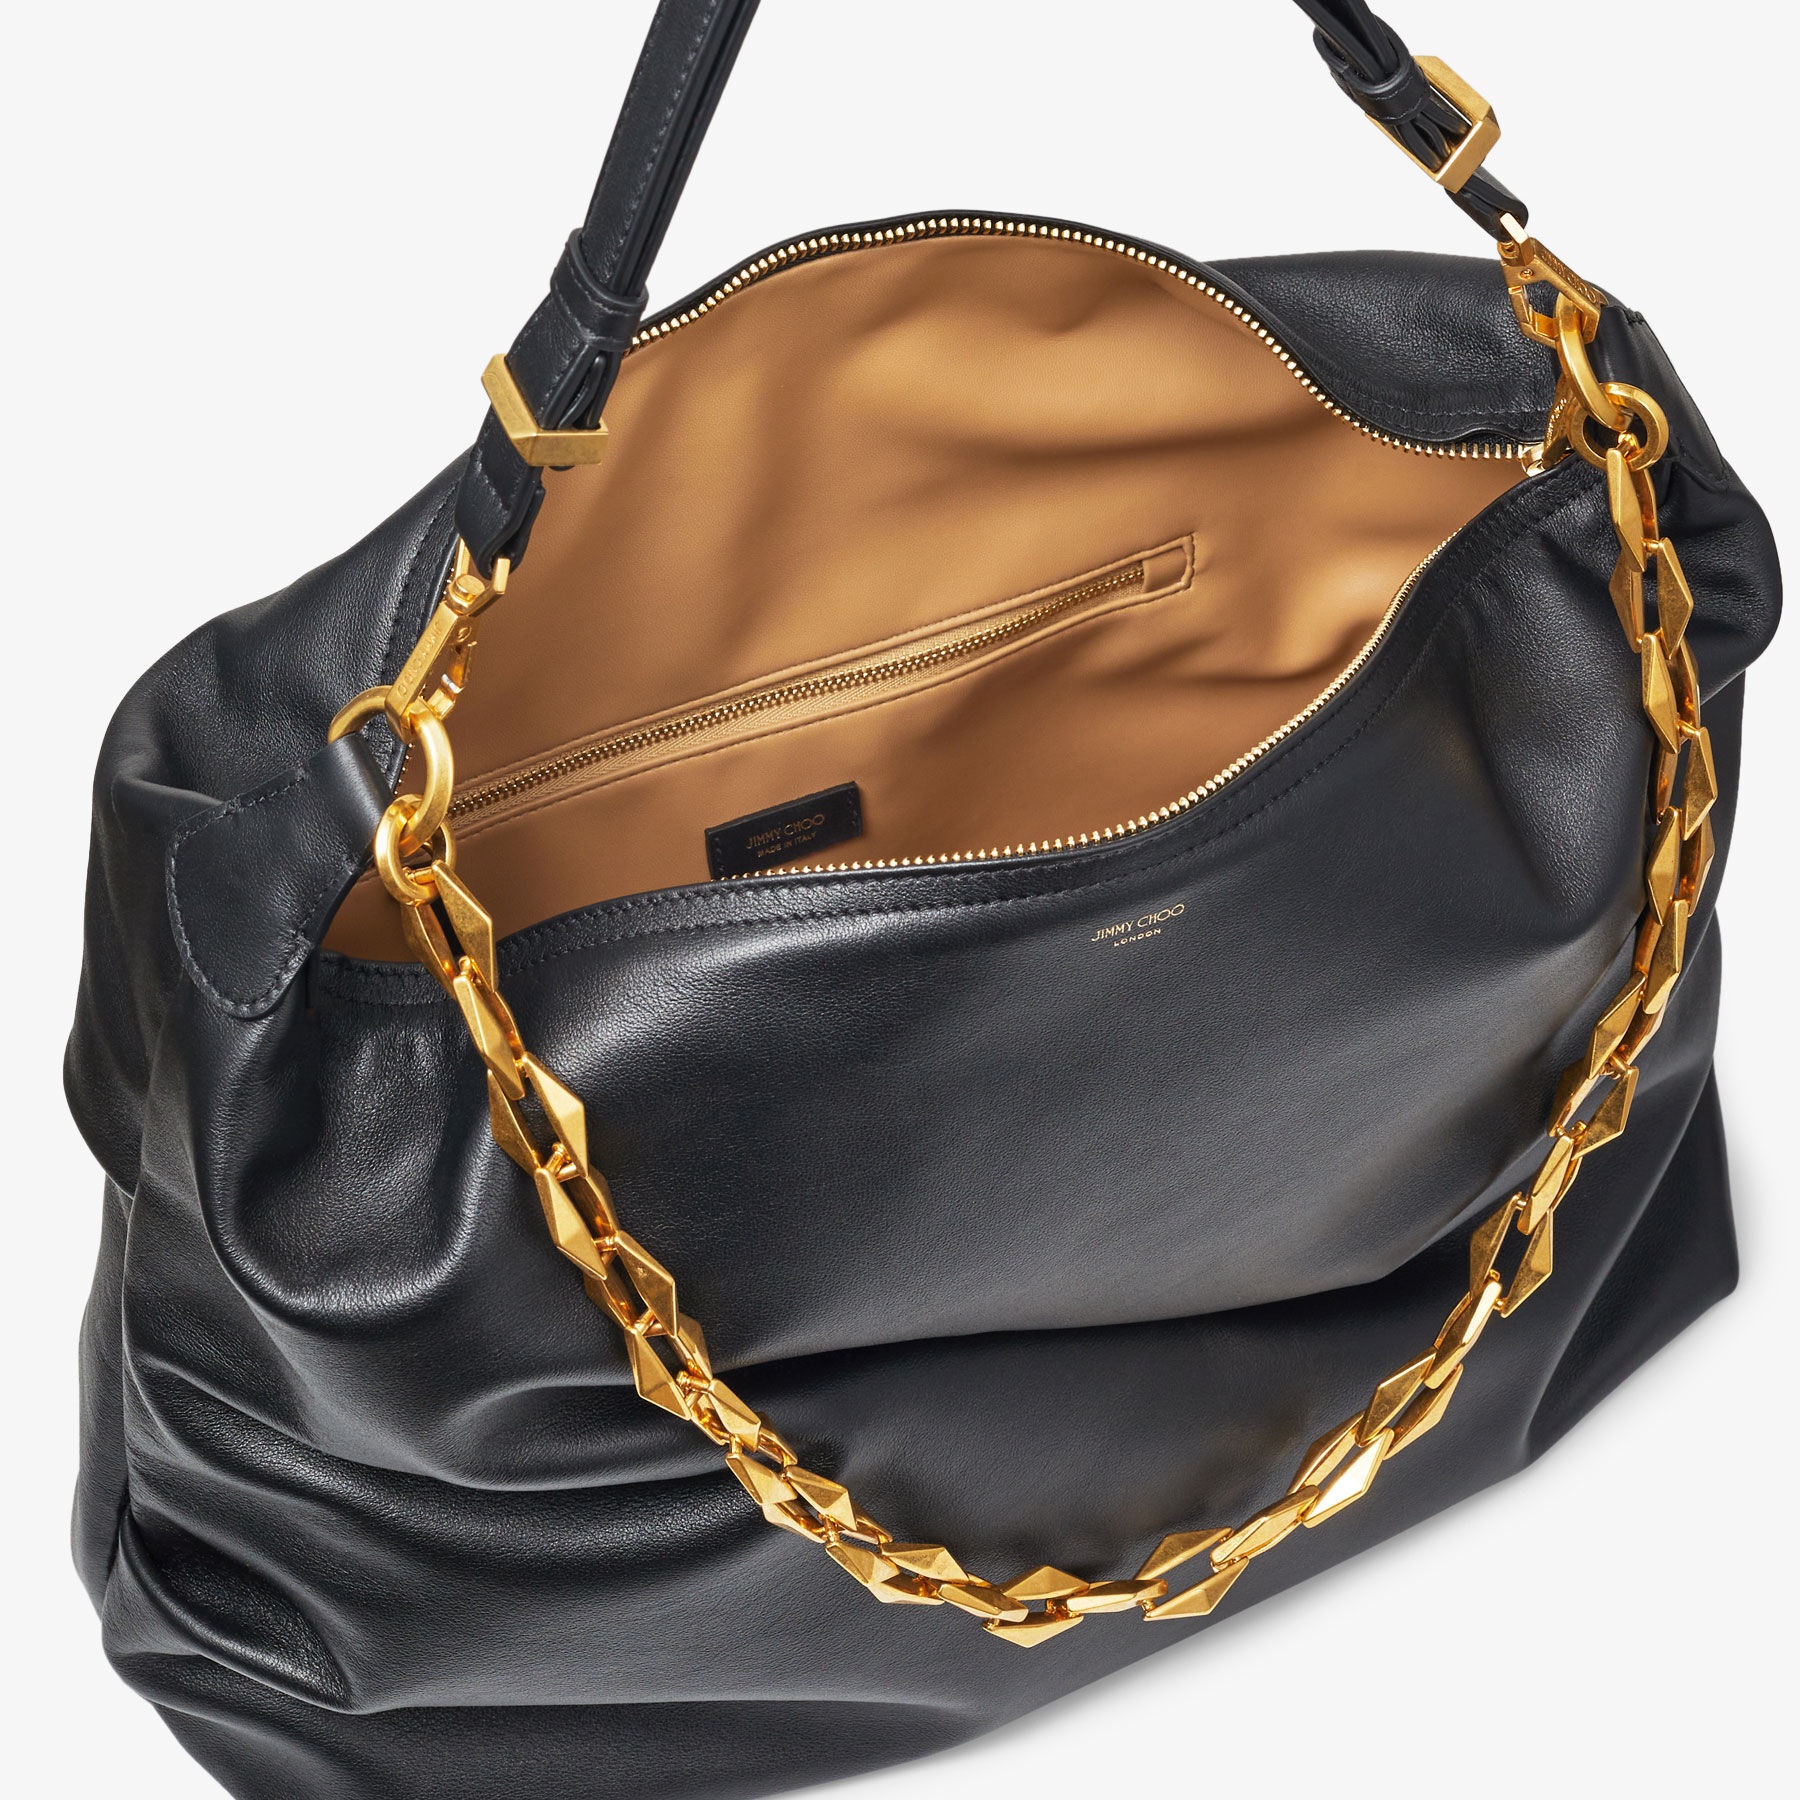 Diamond Soft Hobo M
Black Soft Calf Leather Hobo Bag with Chain Strap - 5